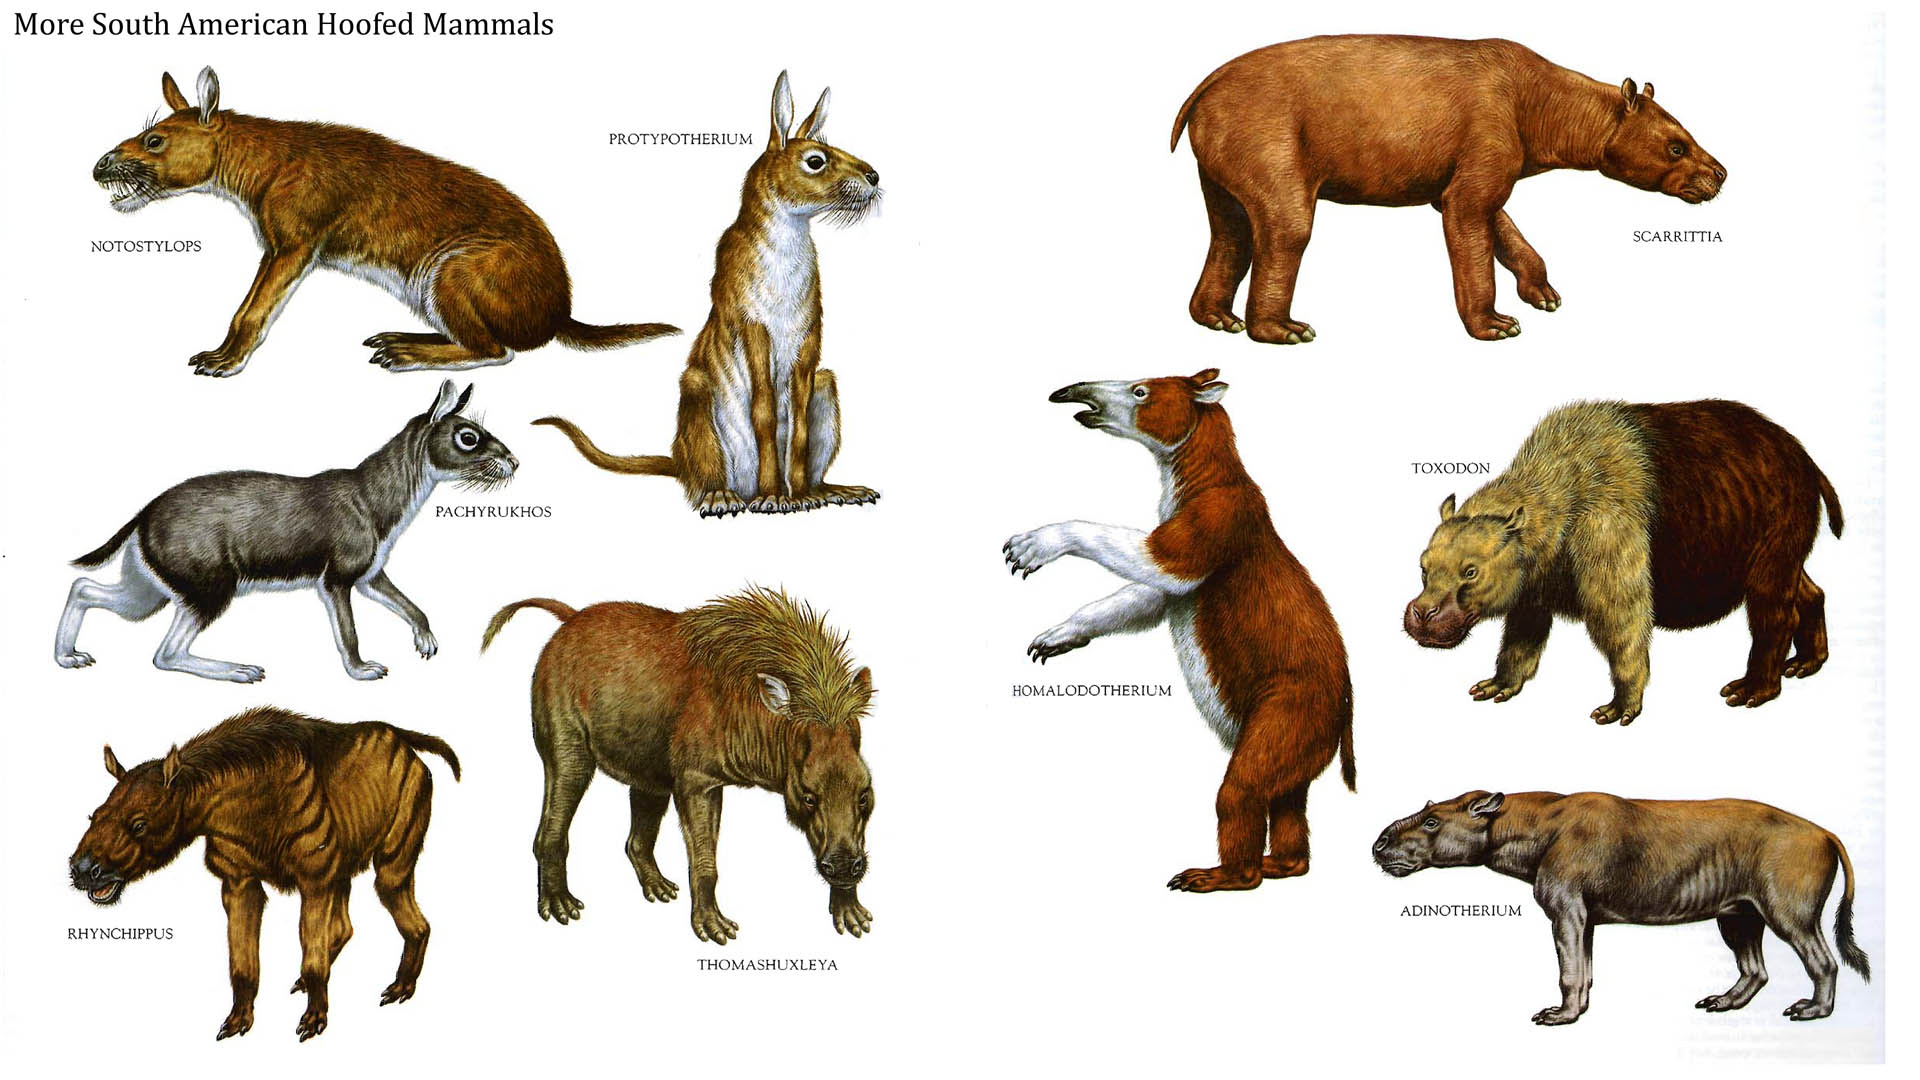 South American Hoofed Mammals 2 - Strange Dinosaurs